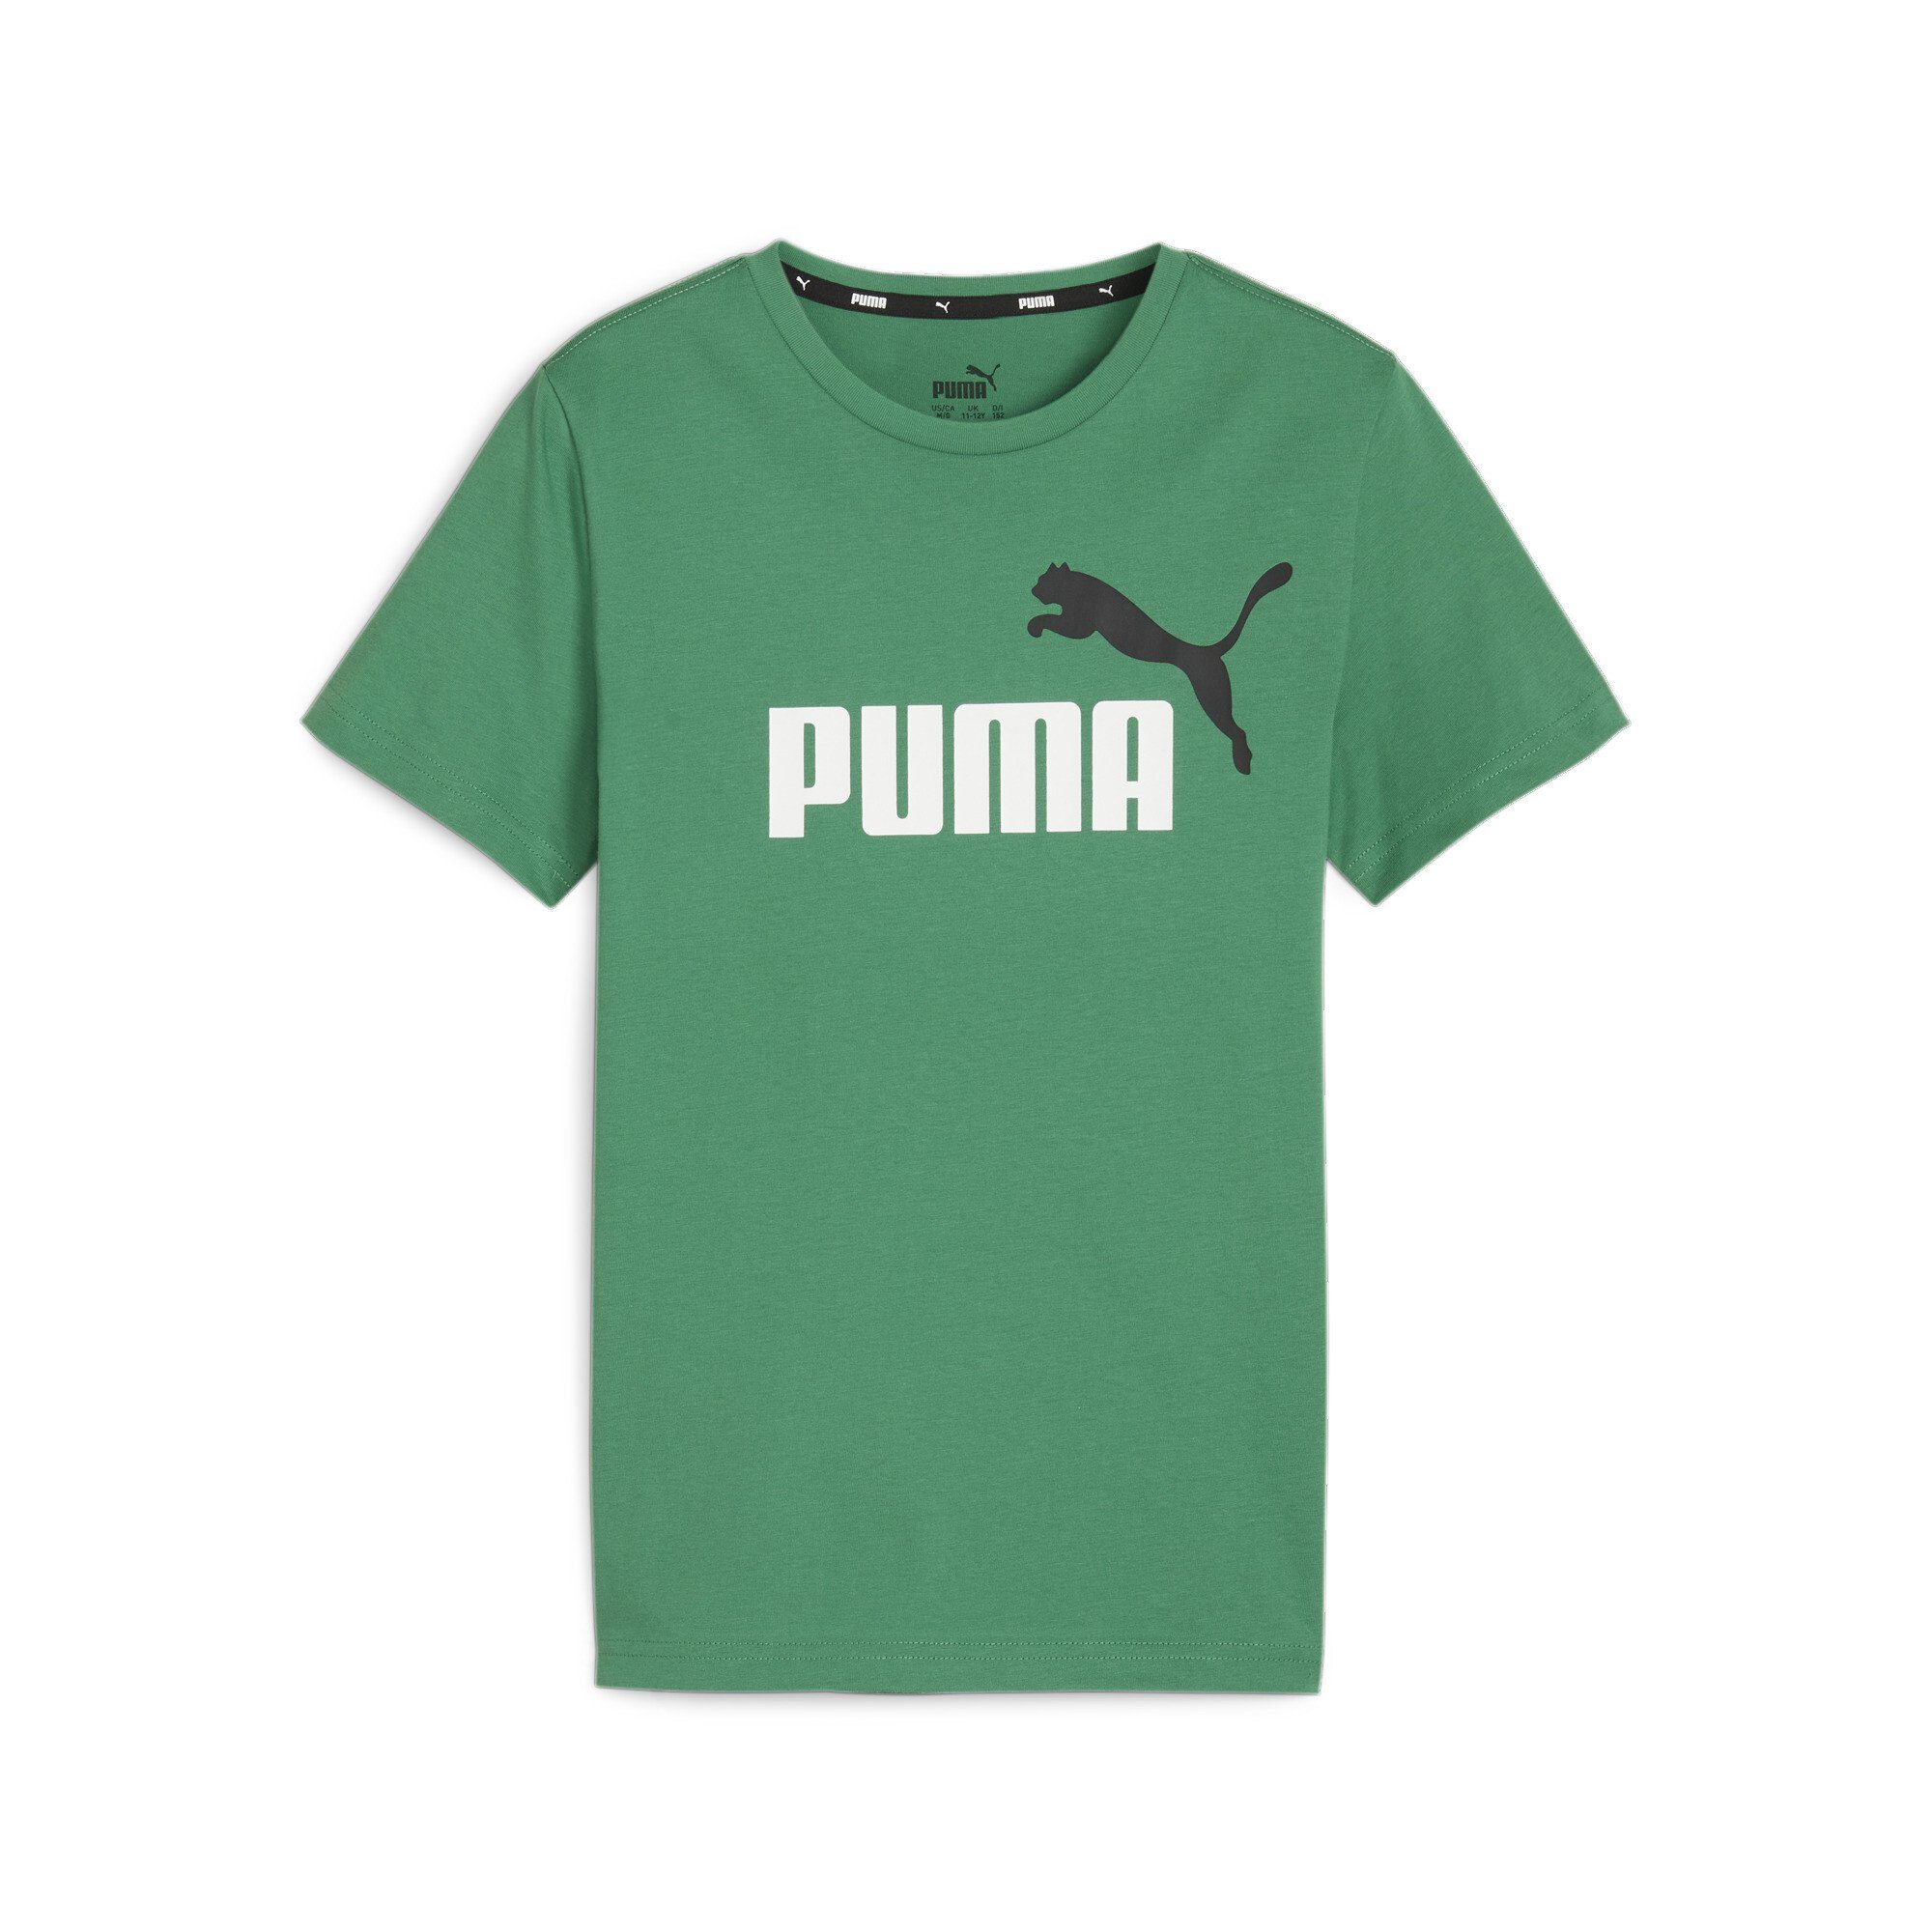 Puma T-shirt groen Katoen Ronde hals Logo 152